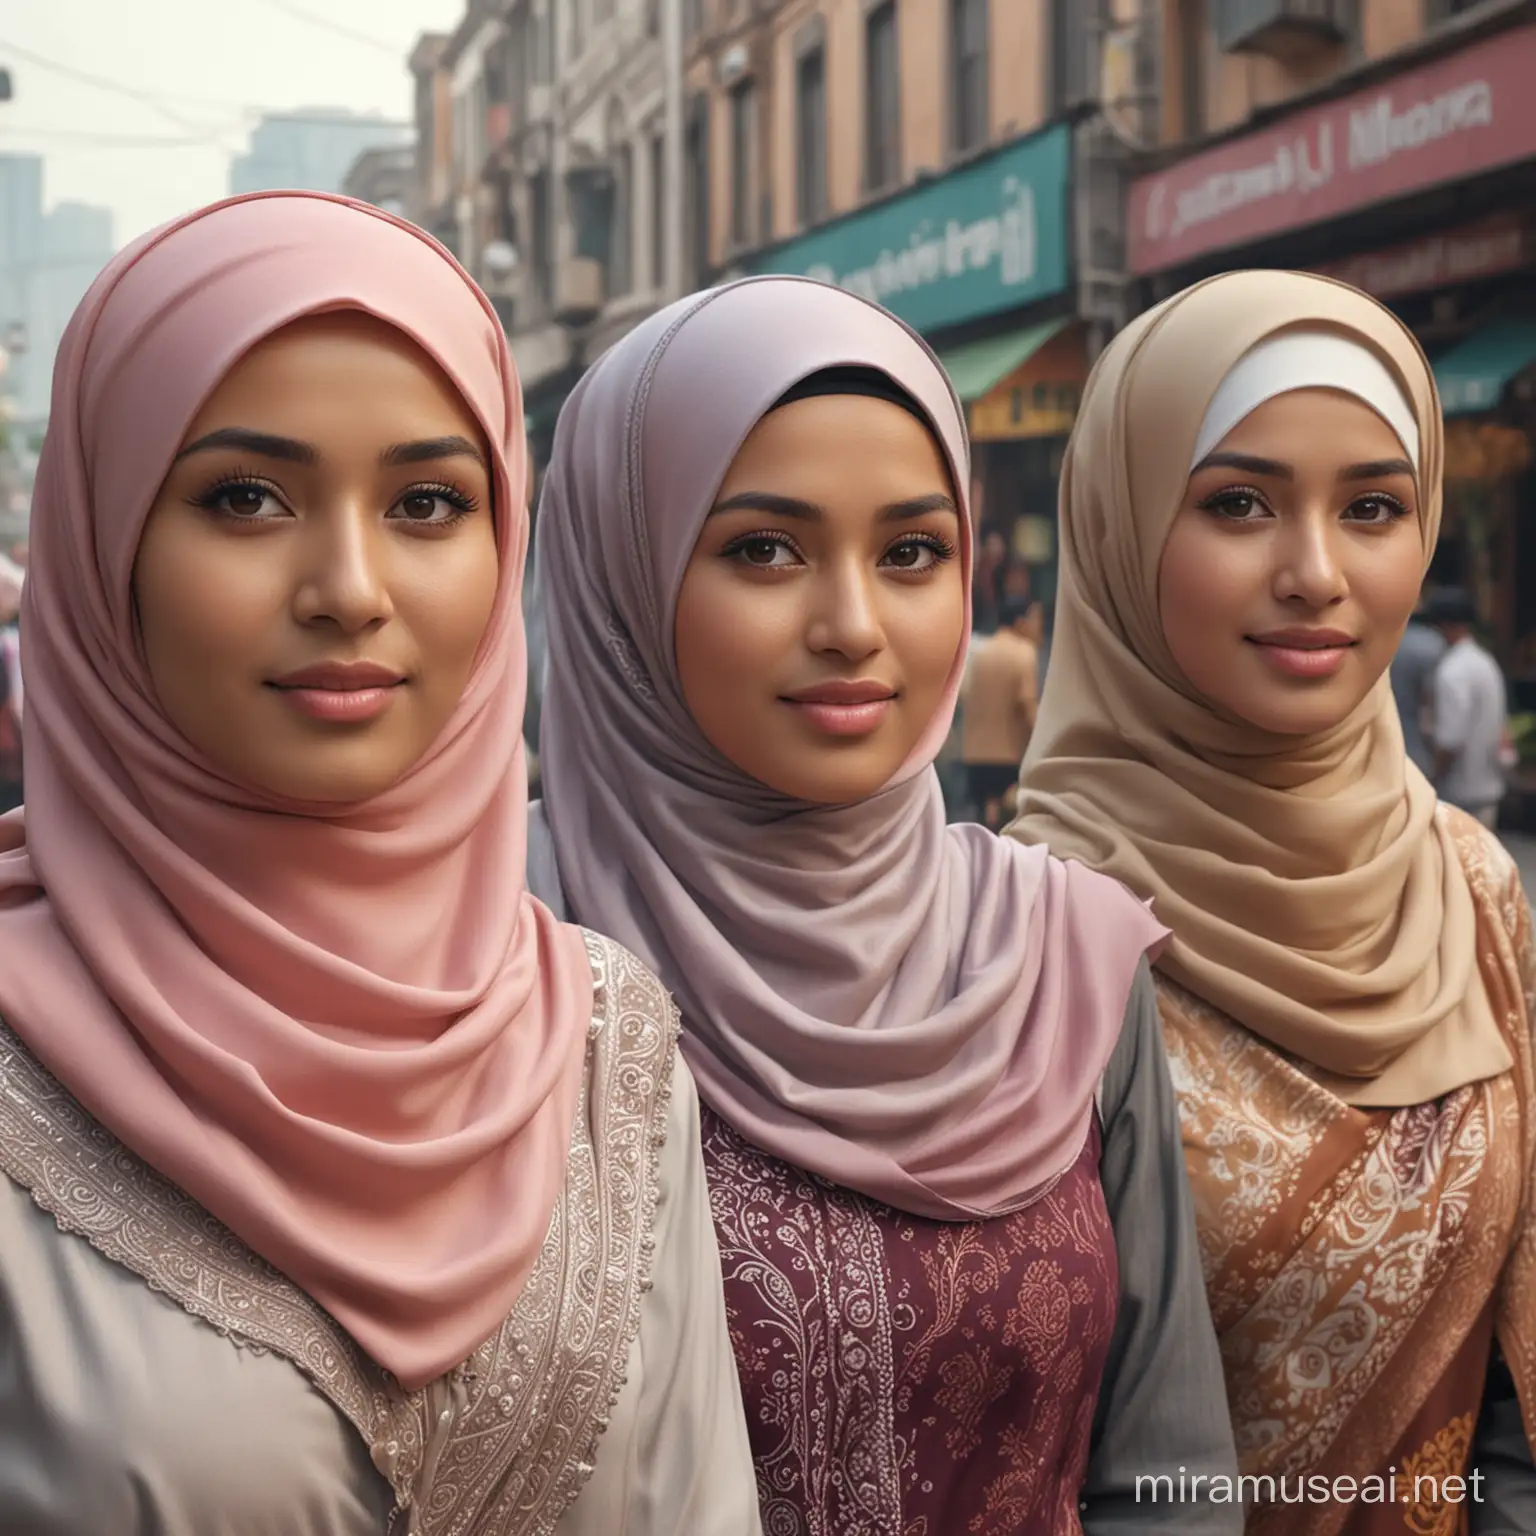 Three Indonesian Women in Hijabs on Busy Market Street